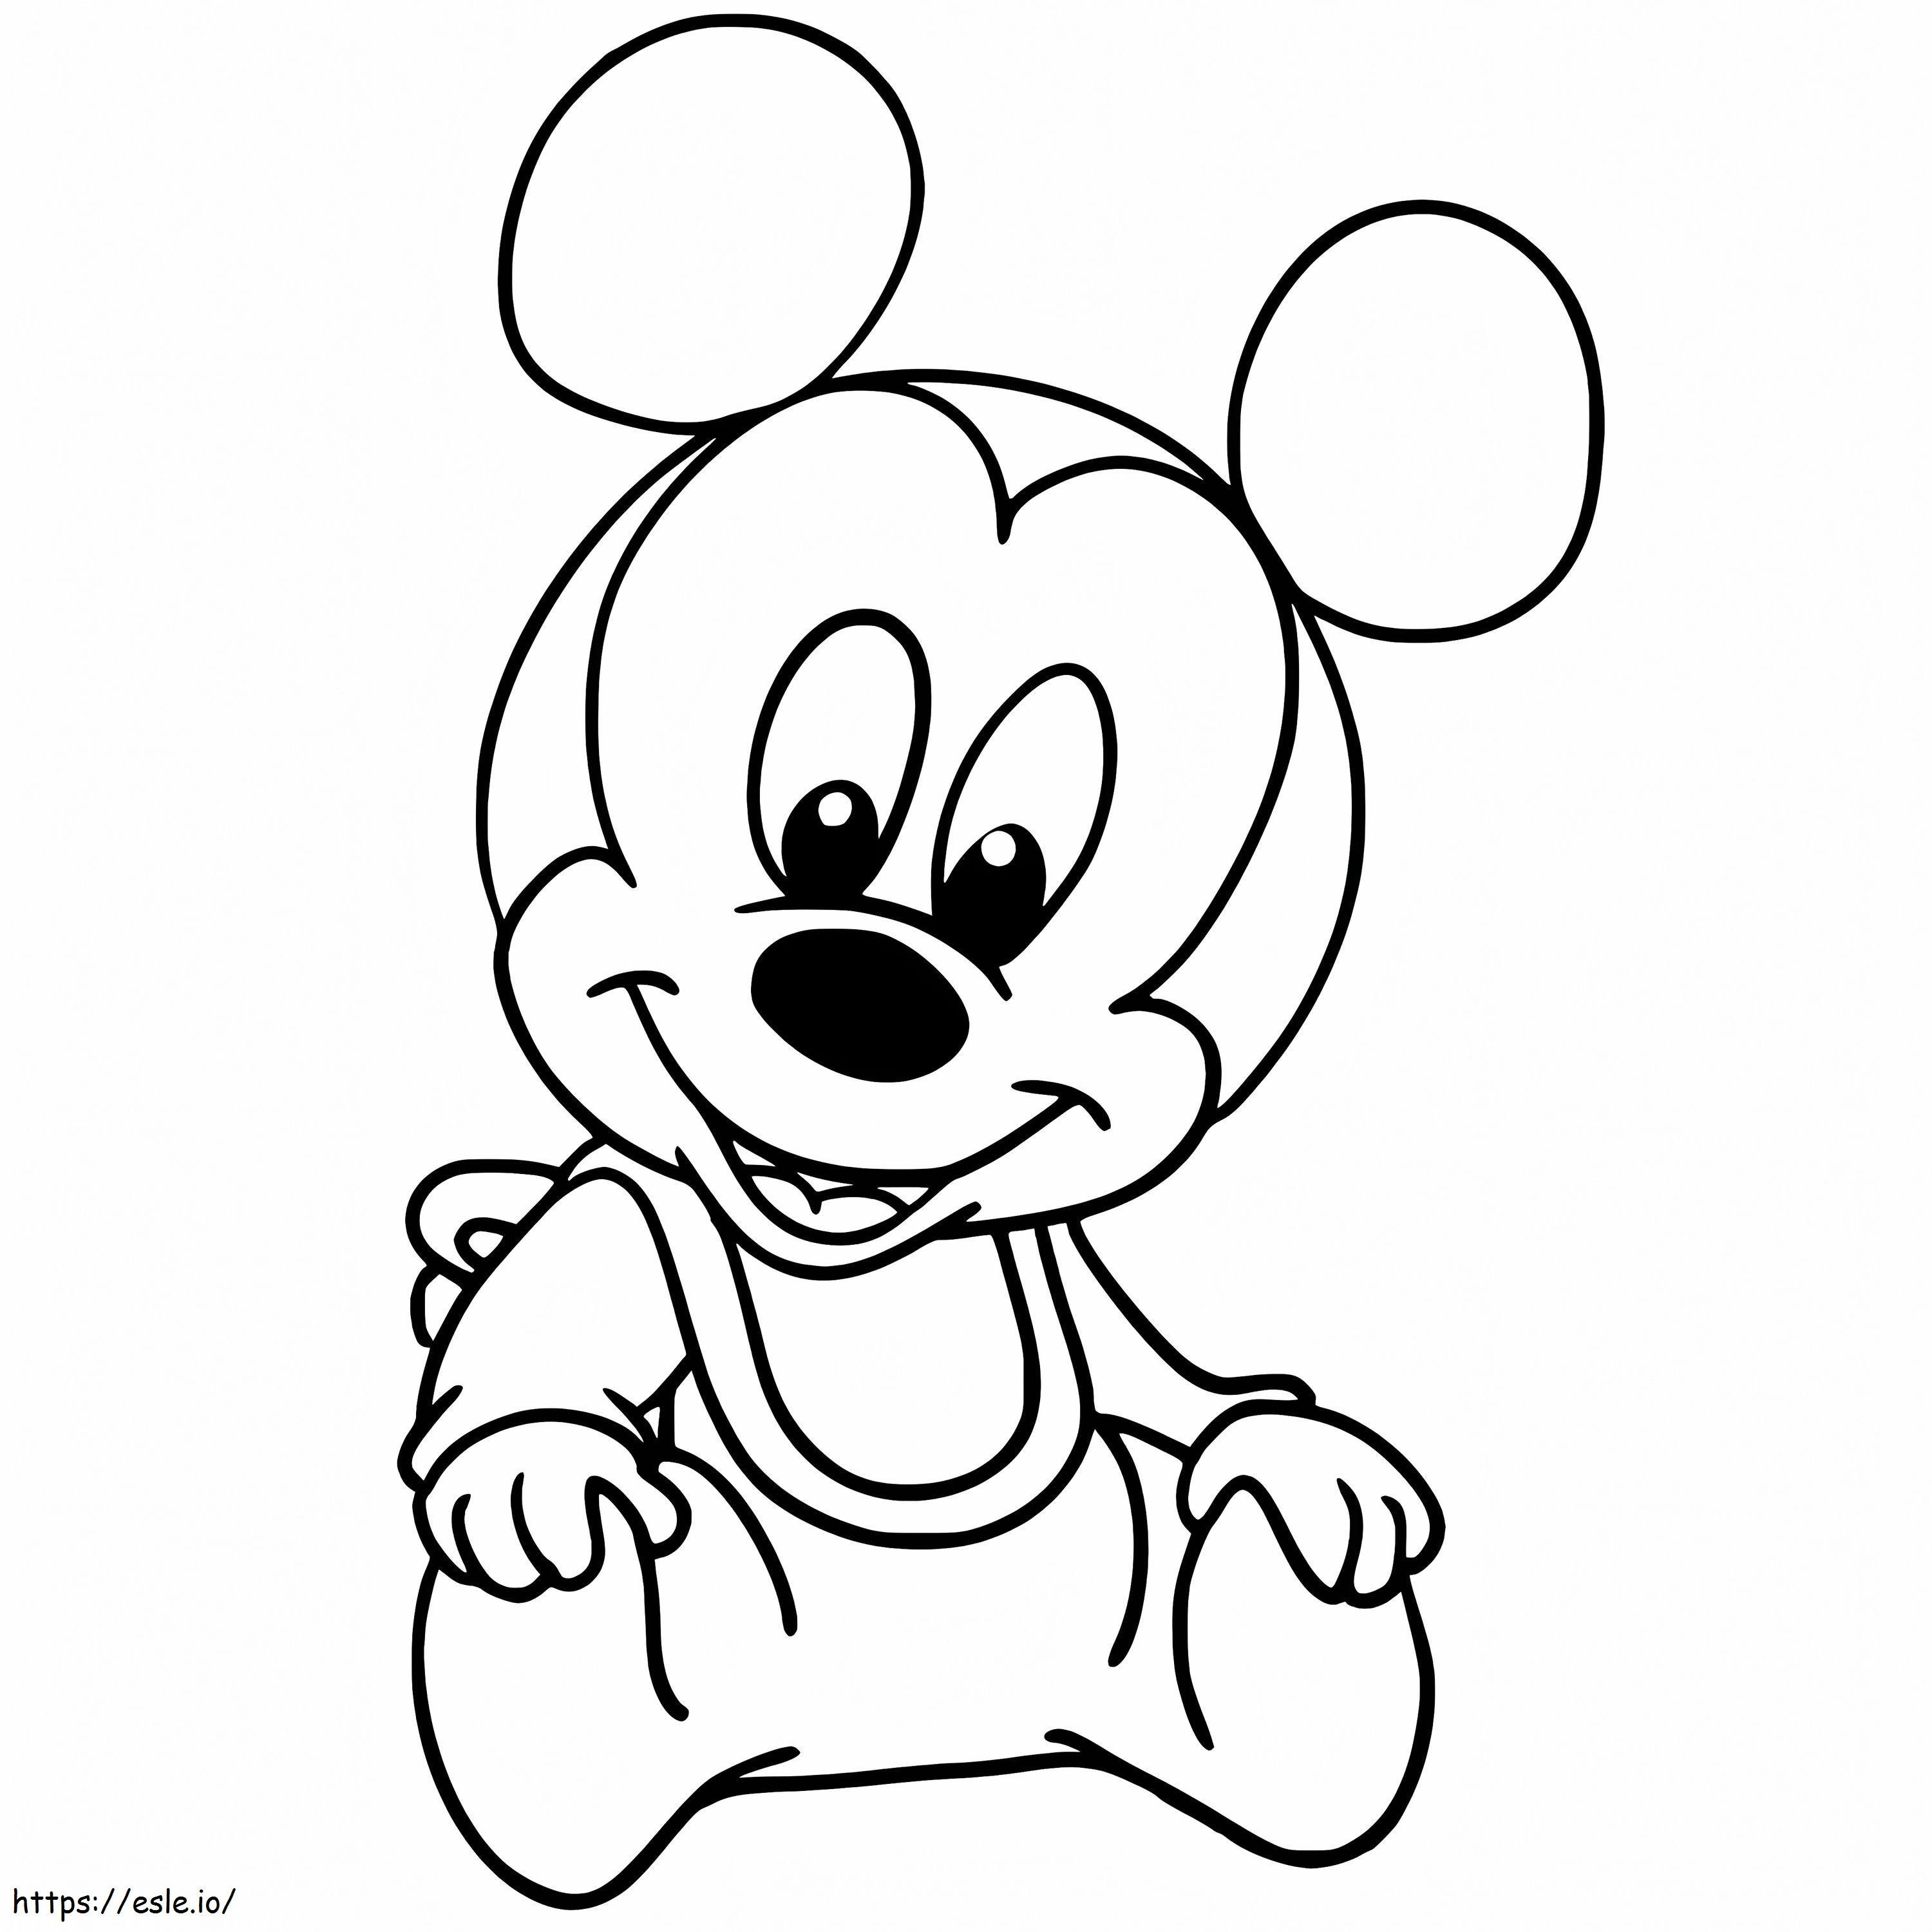 Disneybaby Mickey kleurplaat kleurplaat